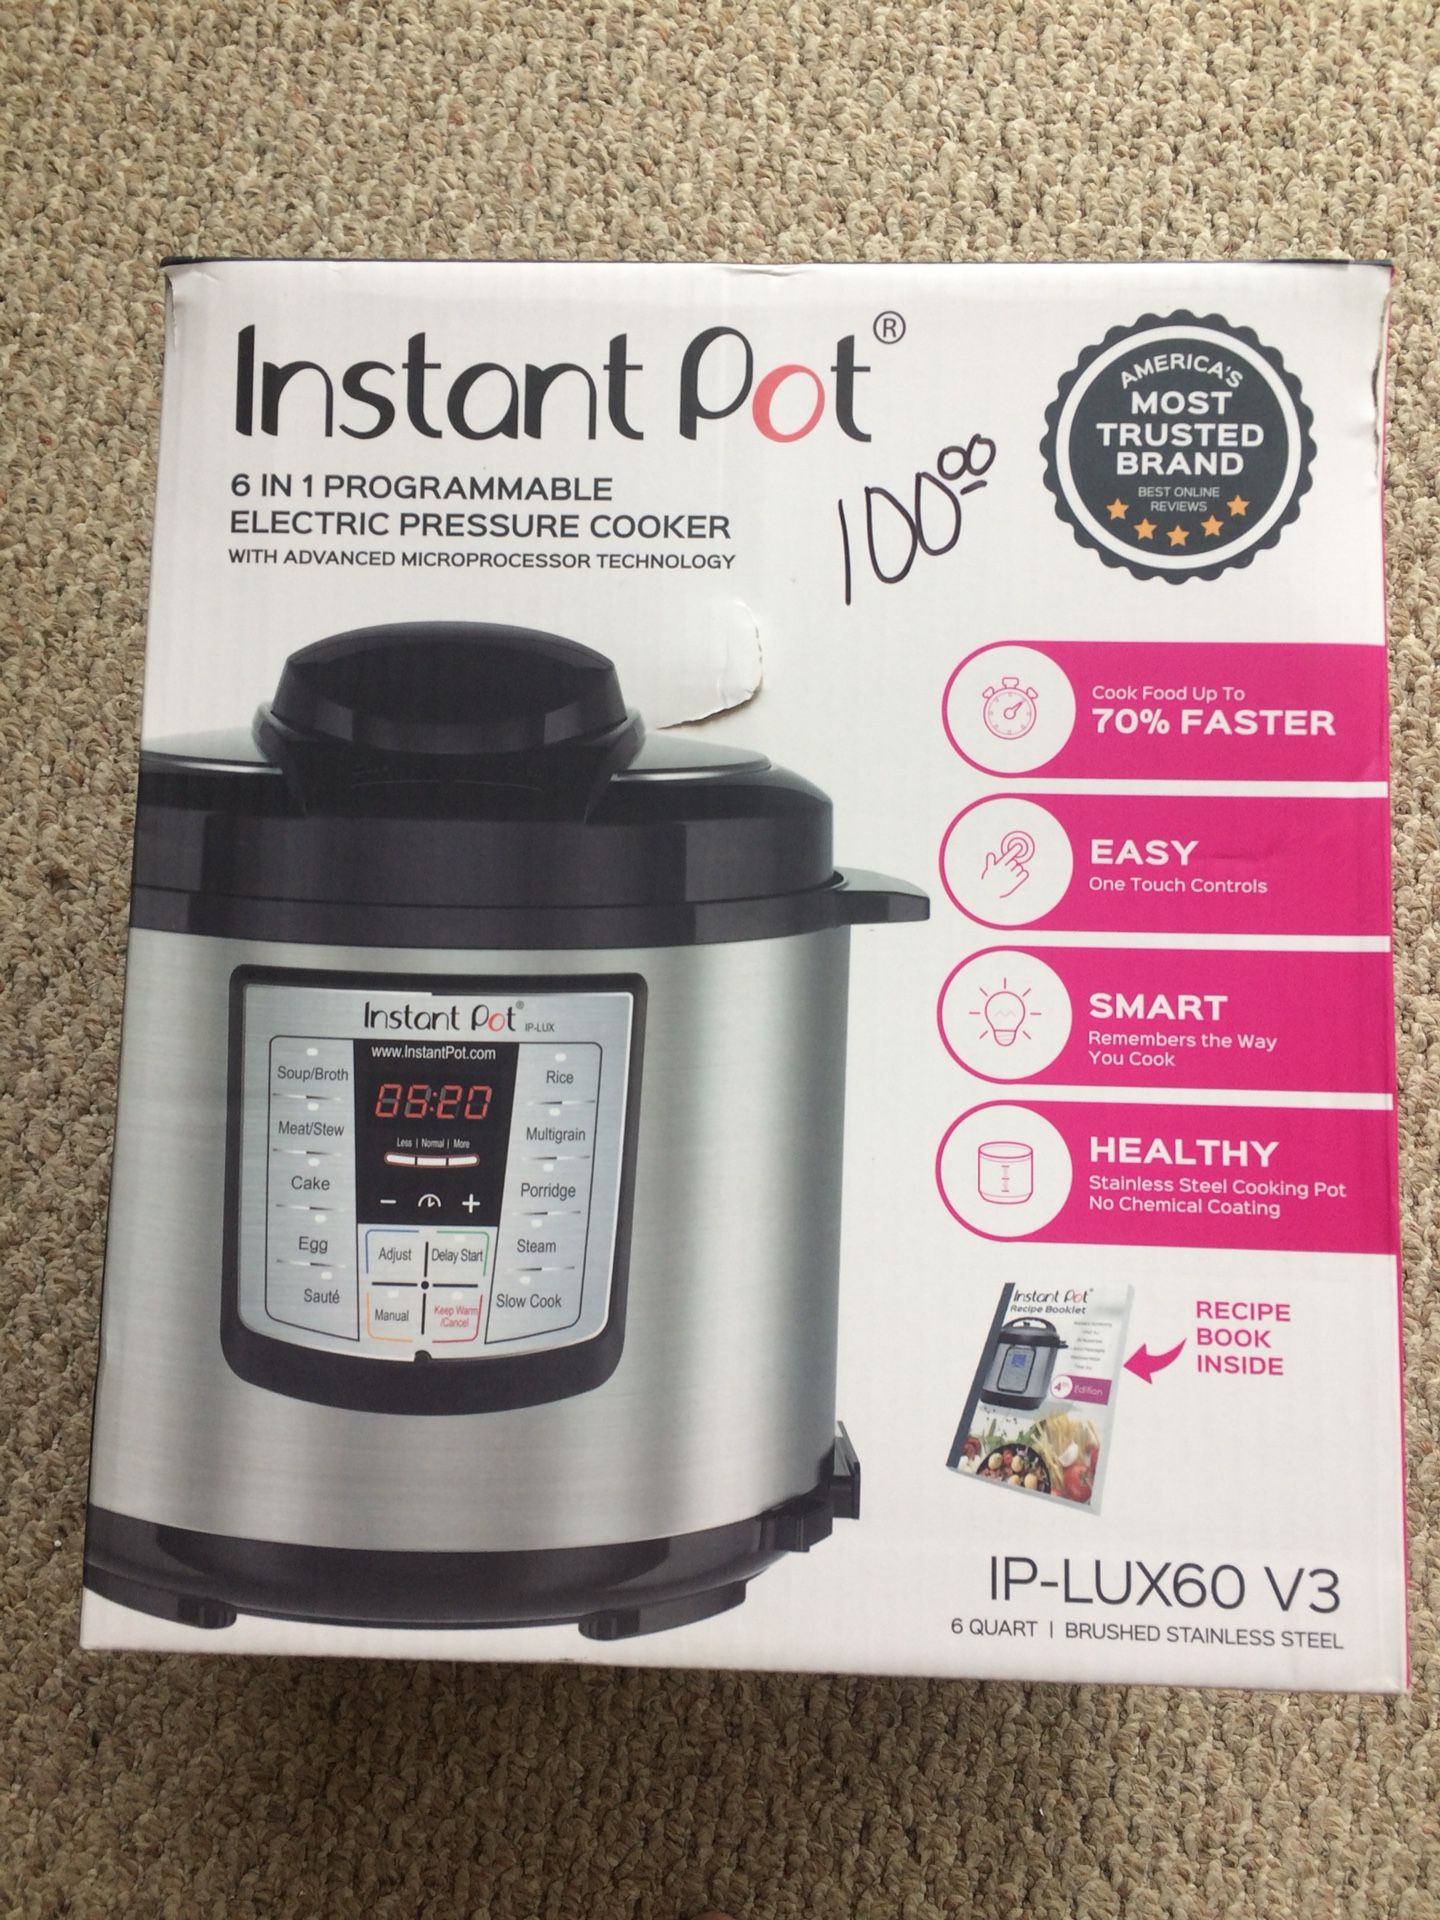 Instant pot 6 in 1 programmable electric pressure cooker 6 quart IP-LUX60 V3 NIB